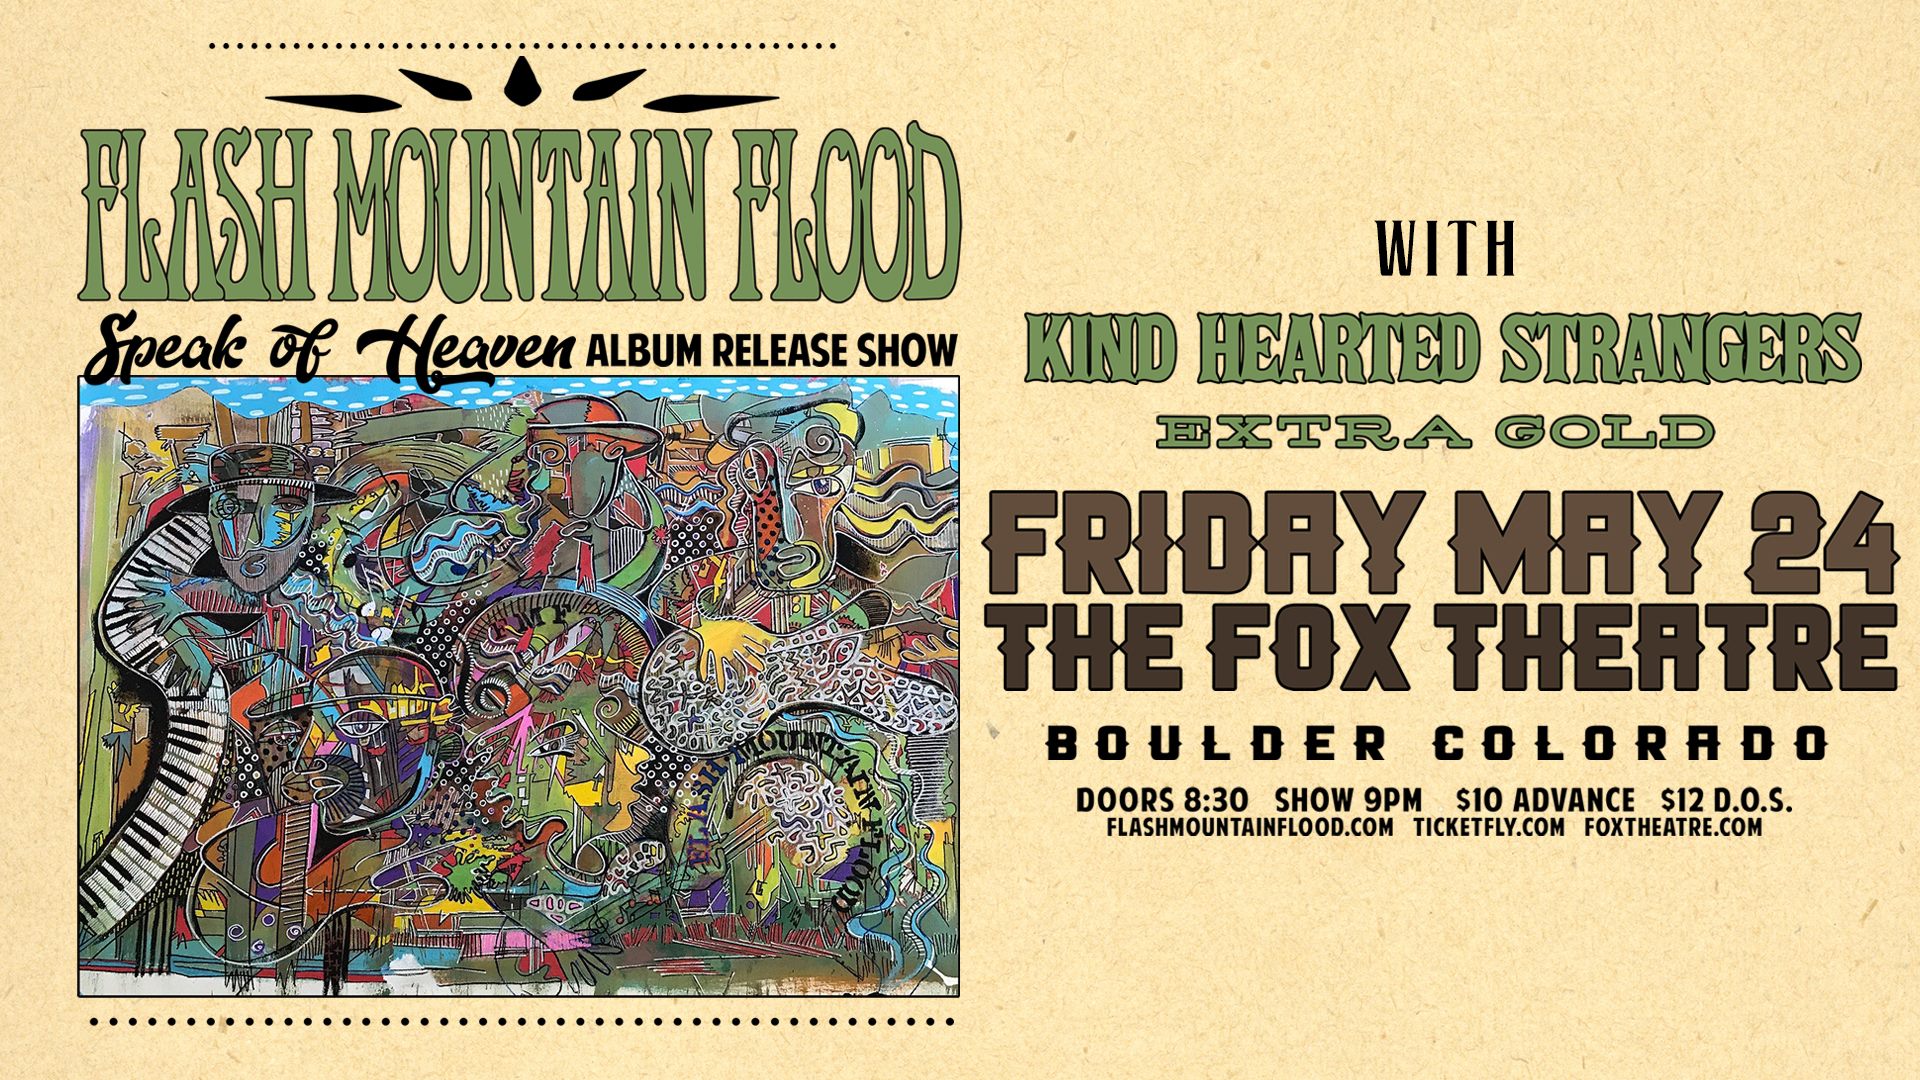 Flash Mountain Flood 'Speak Of Heaven Album' Release at The Fox Theatre